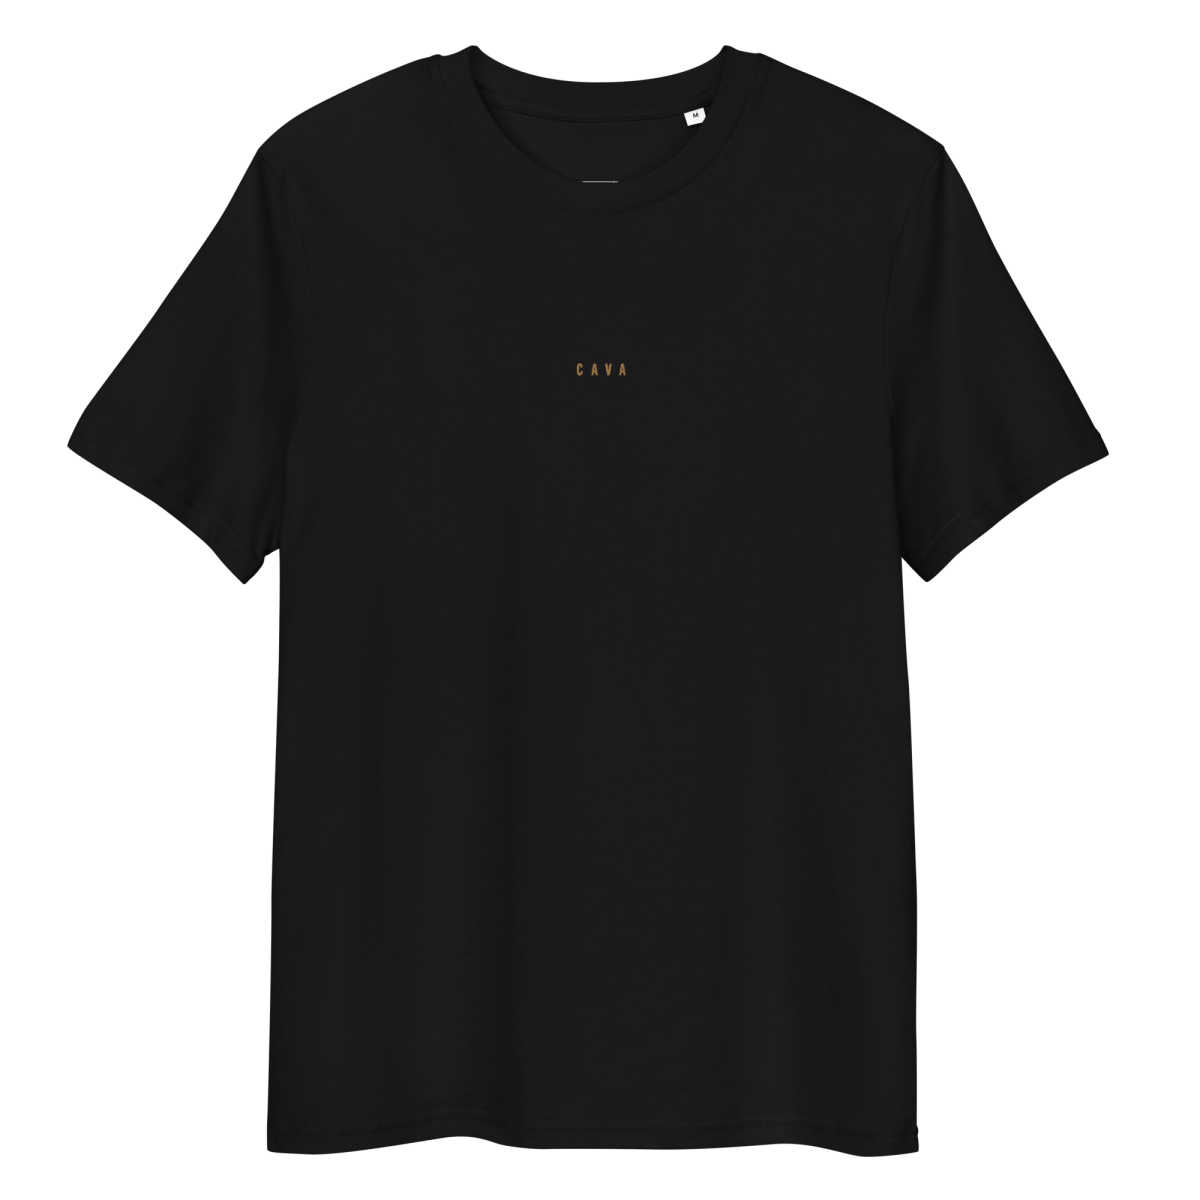 Das Cava Bio-T-Shirt